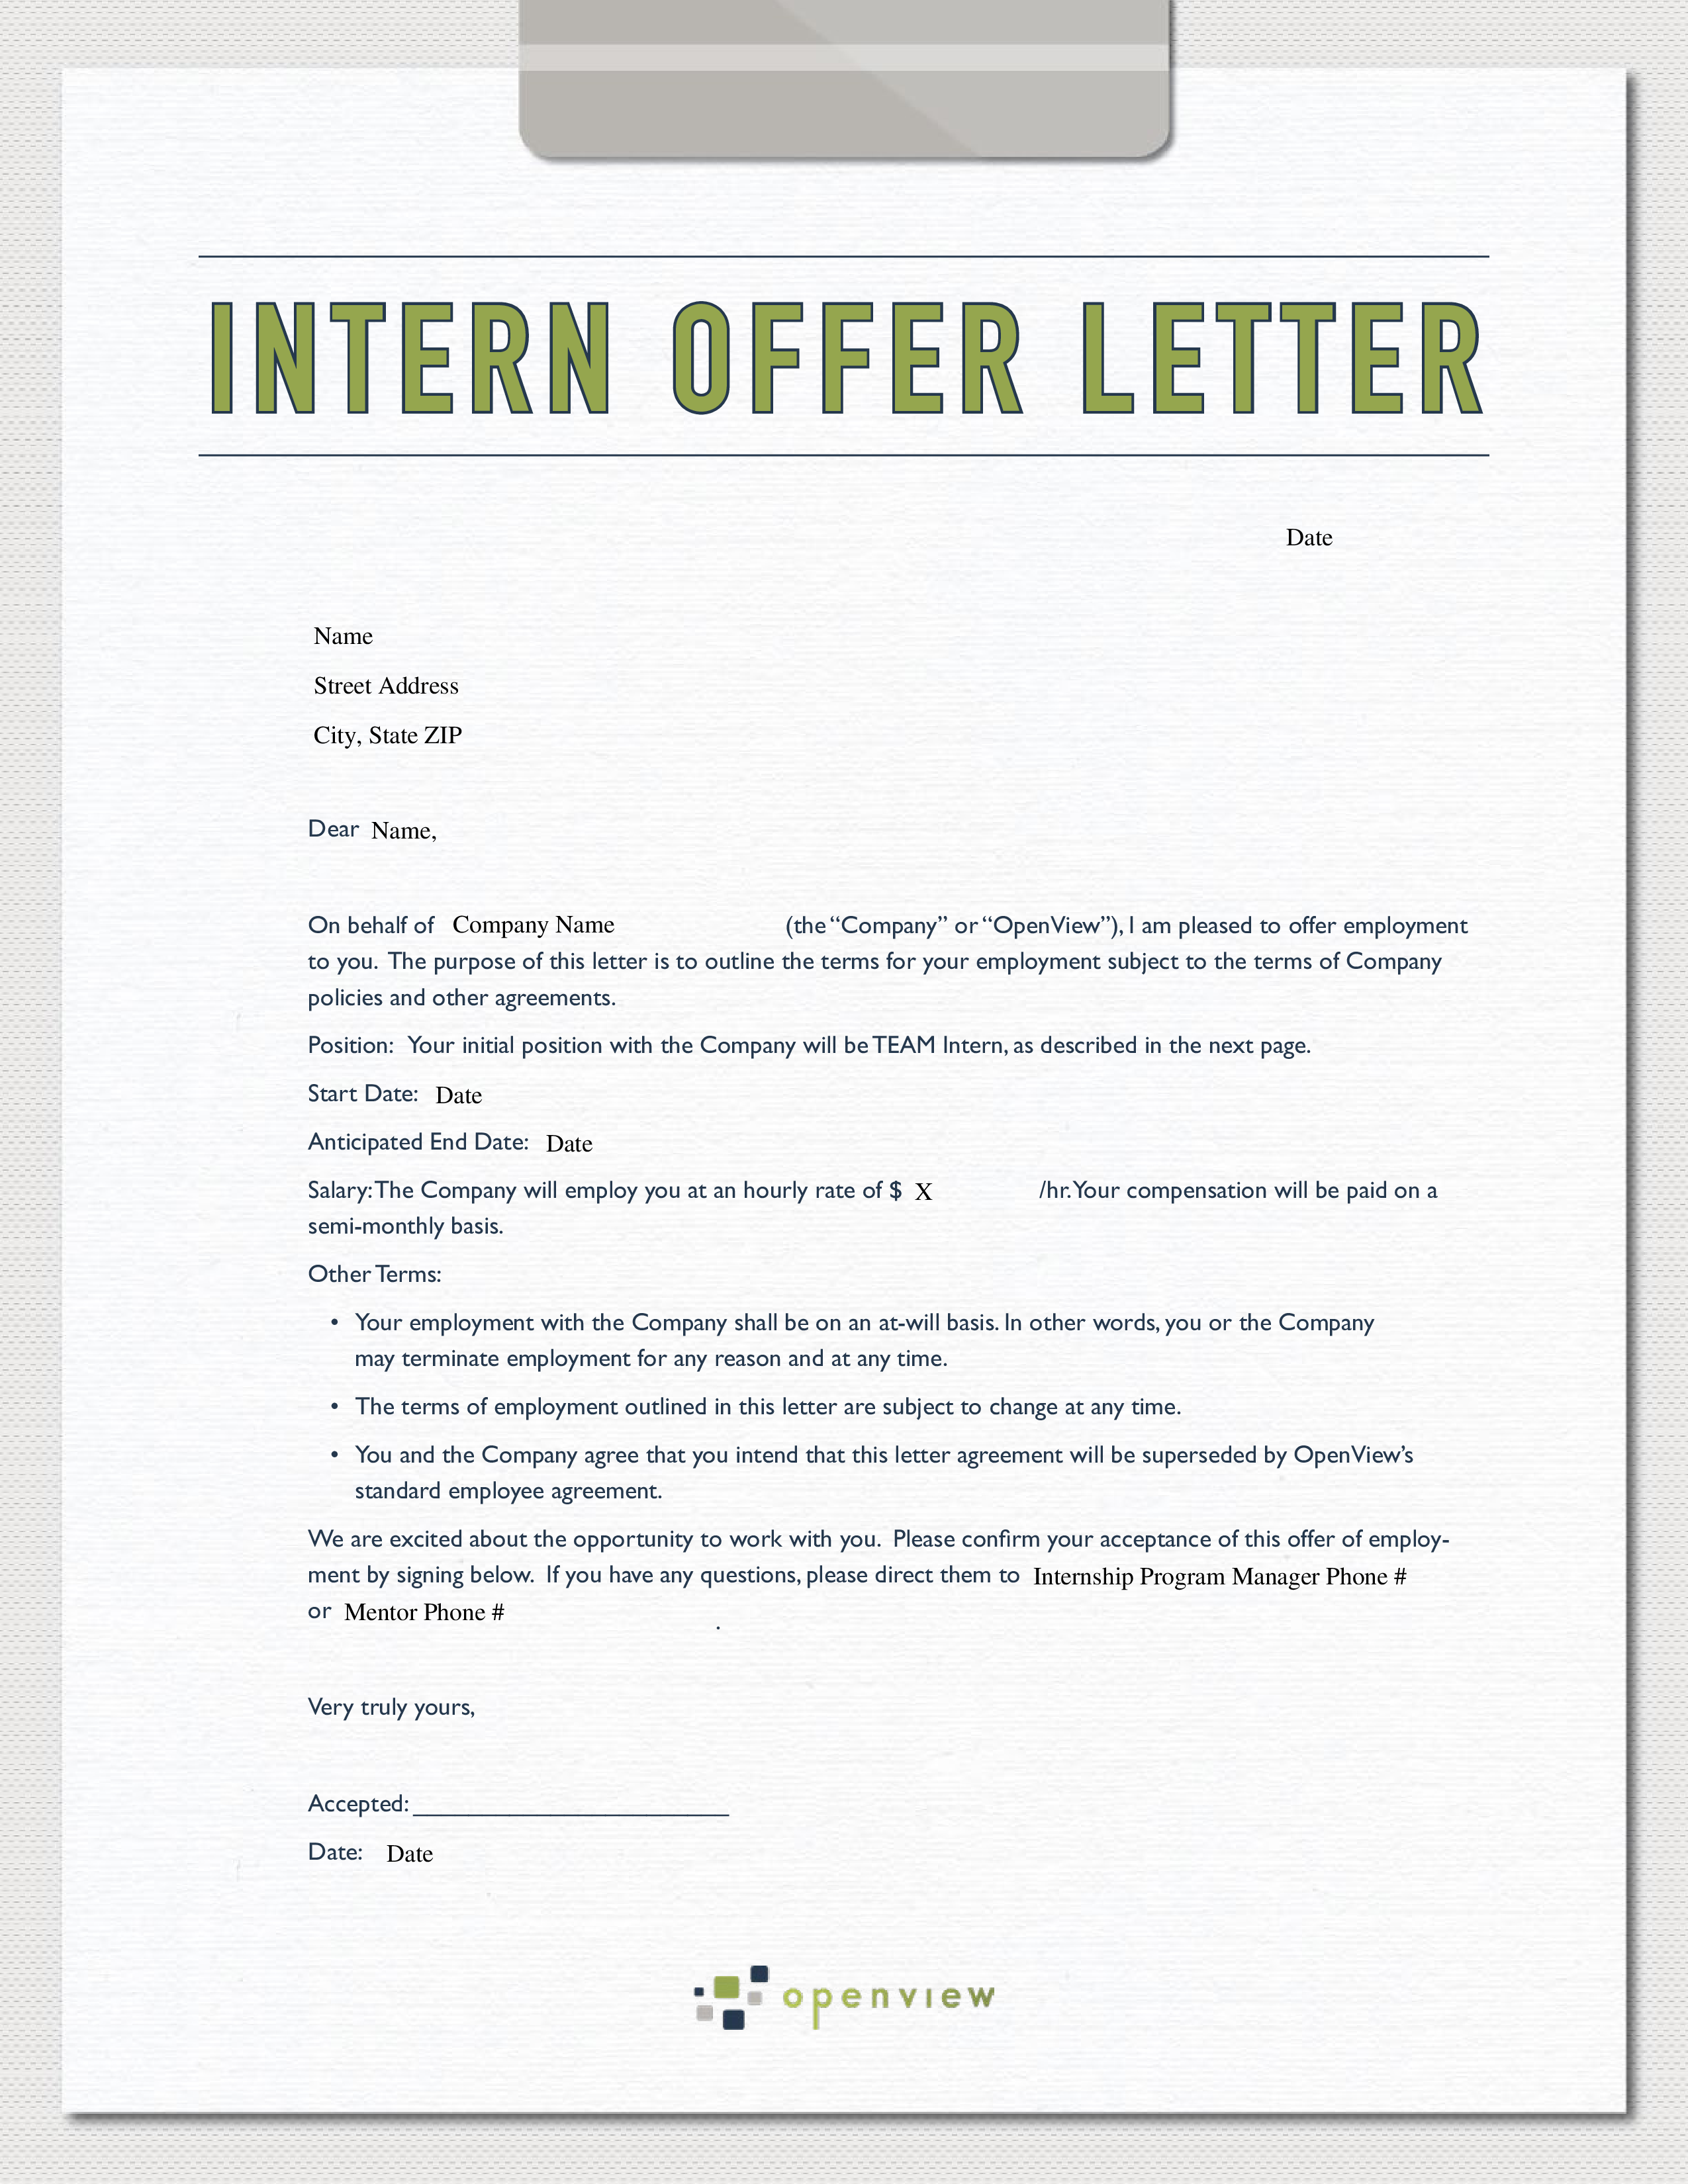 Sample Marketing Internship Offer Letter Templates At